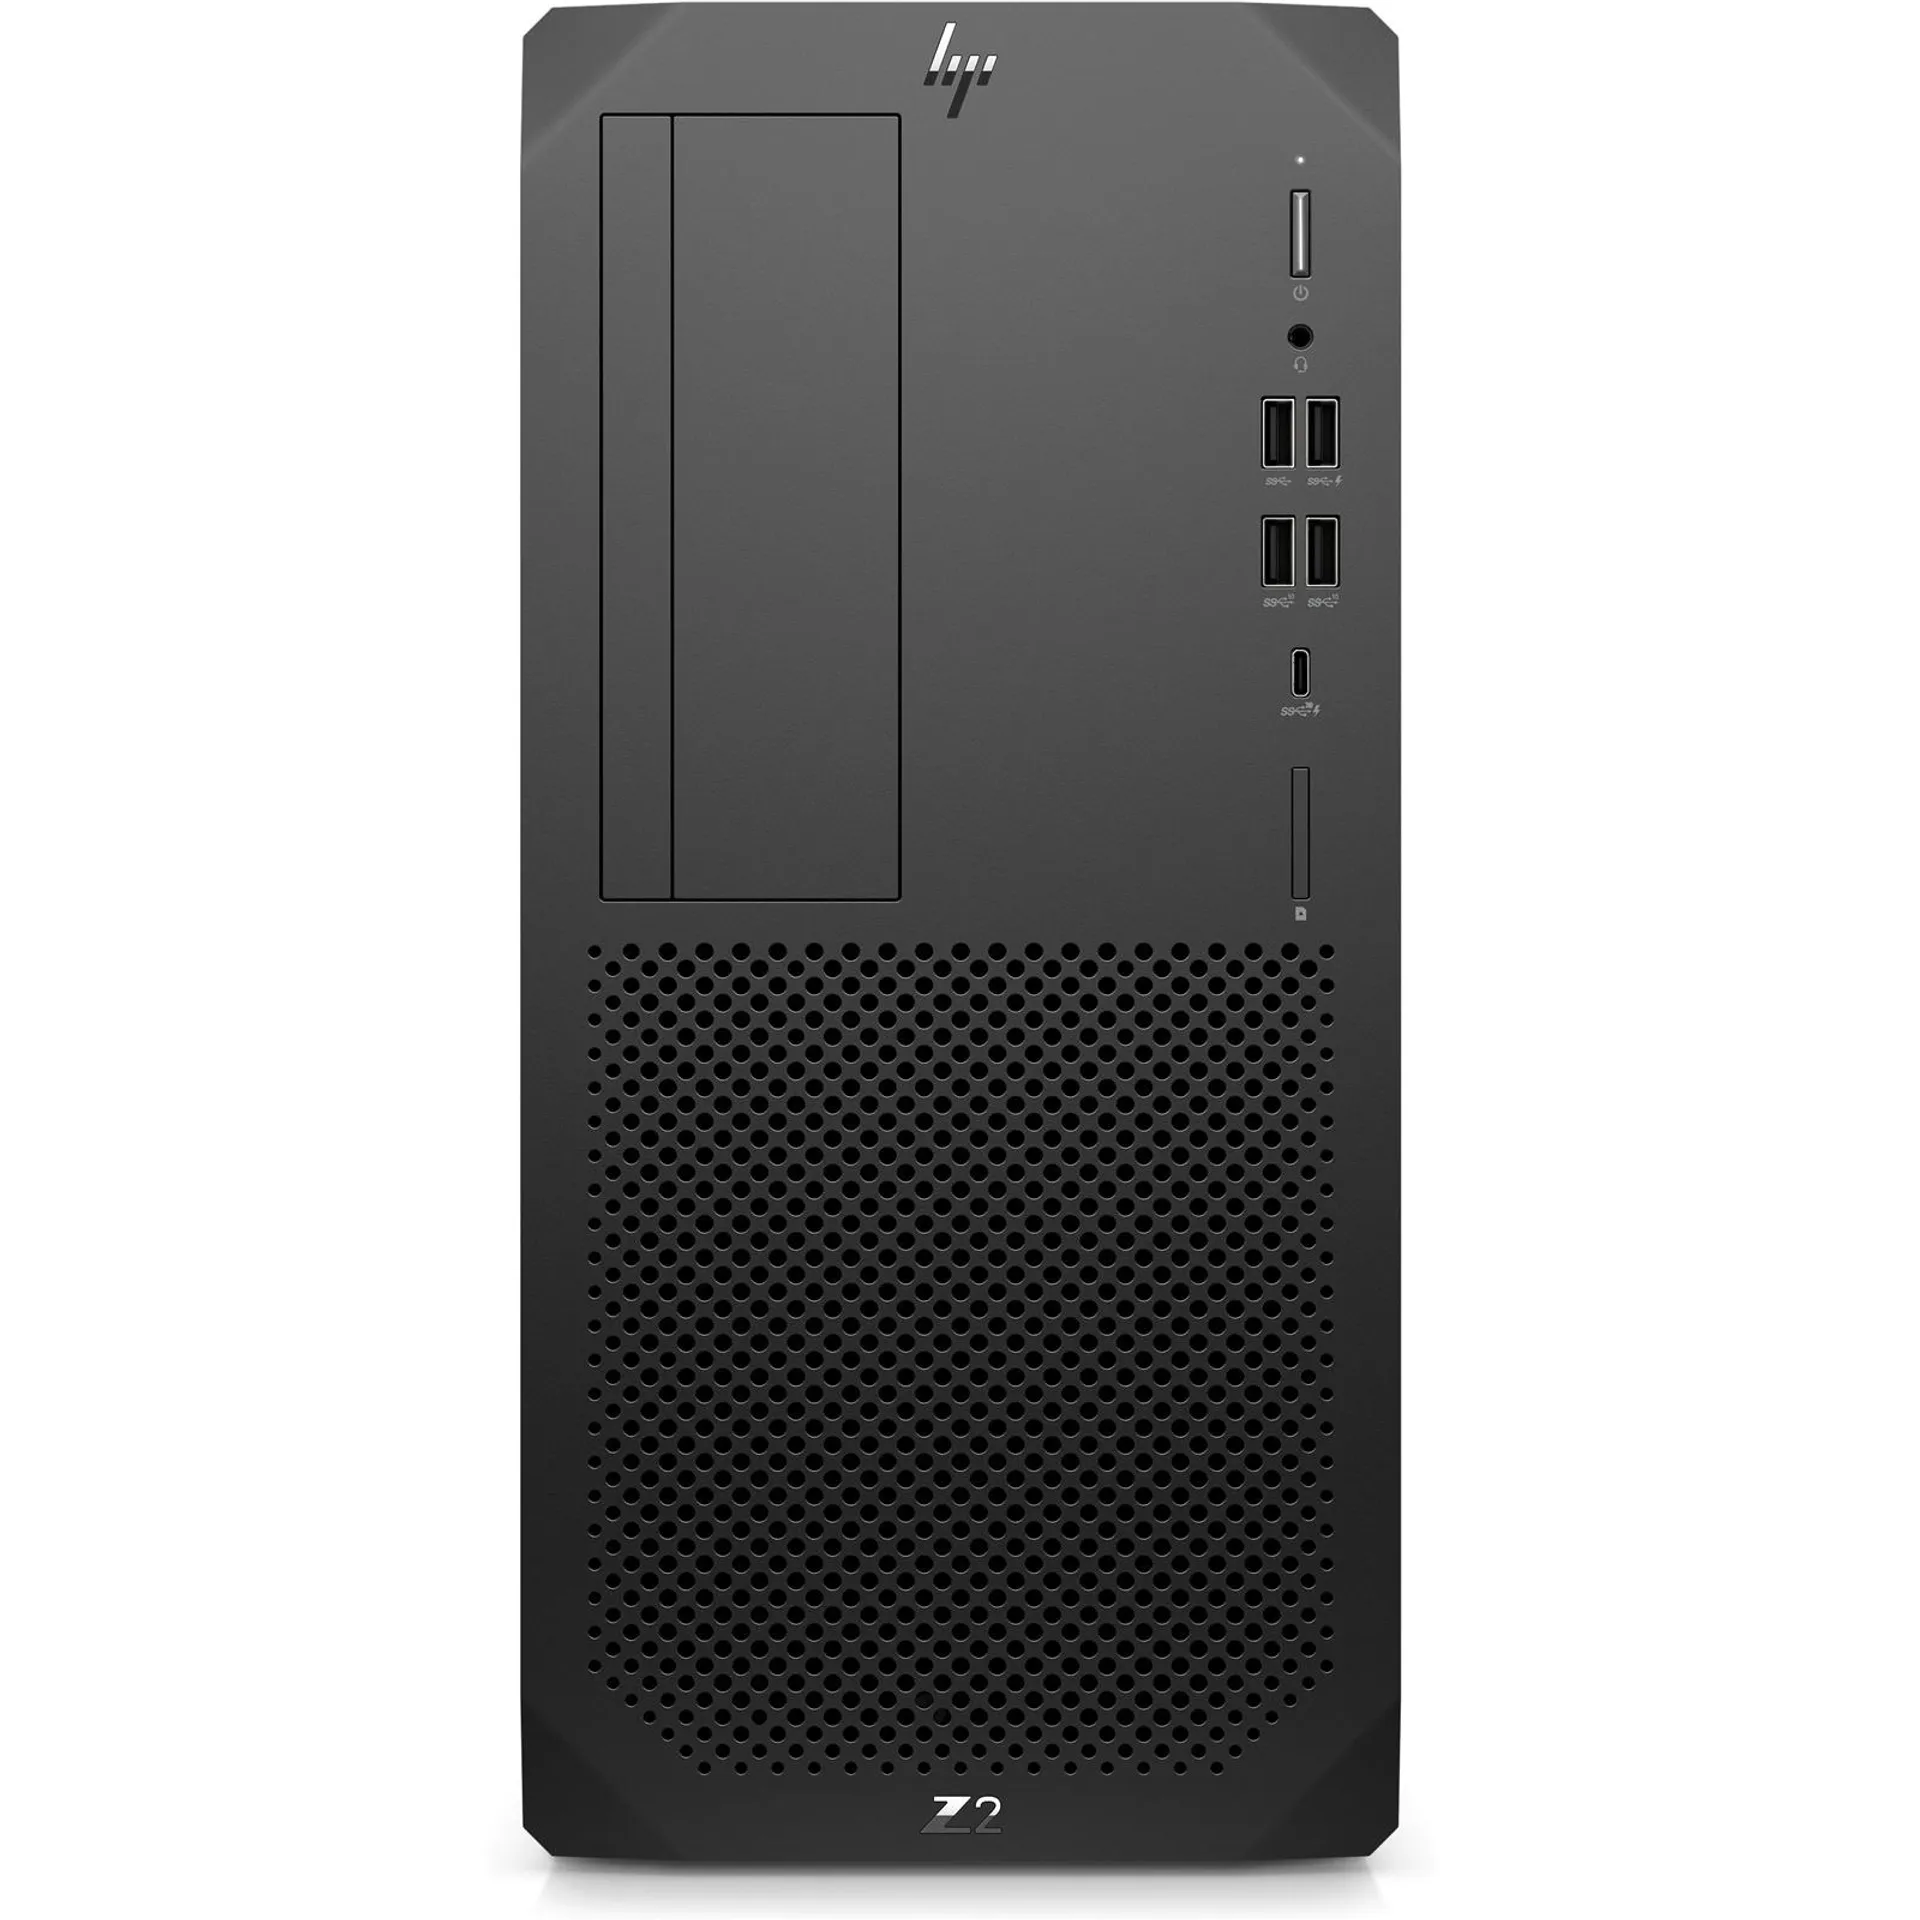 HP RLCTO Z2 Tower G9 Workstation PC